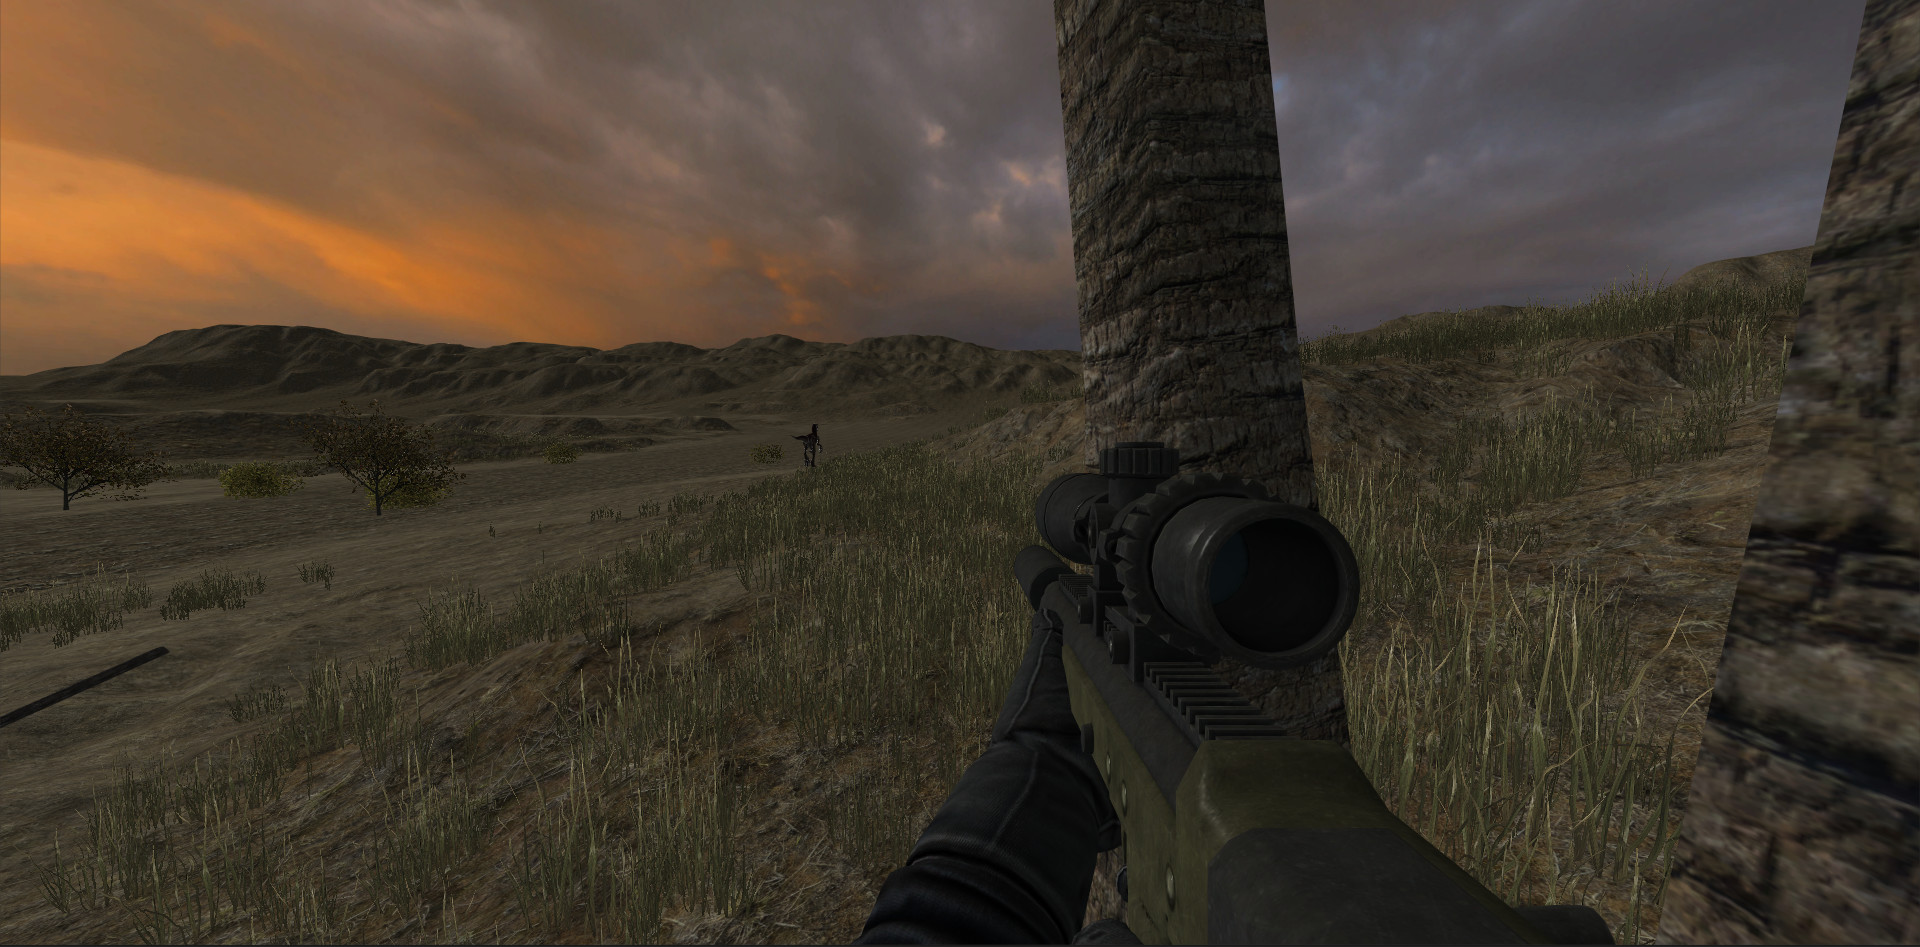 Dinosaur Hunt screenshot